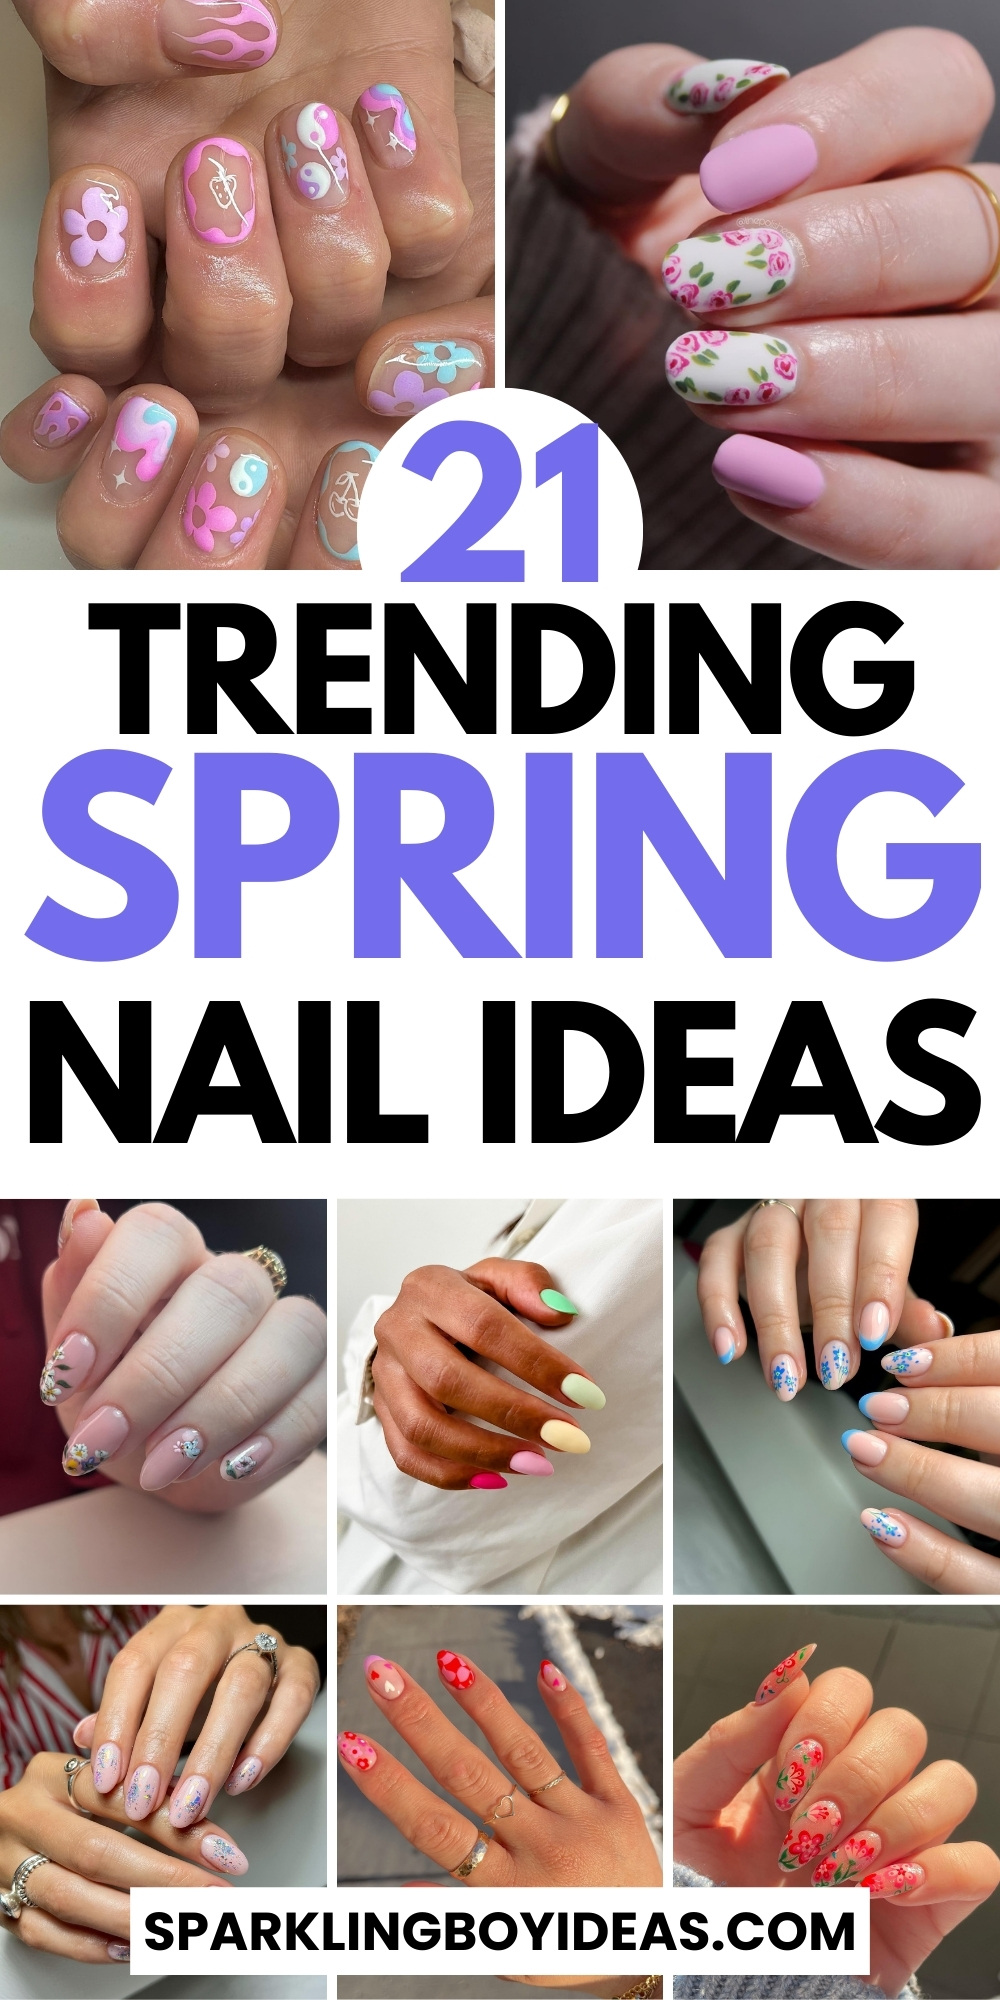 21 Simple Classy Spring Nail Designs - Sparkling Boy Ideas